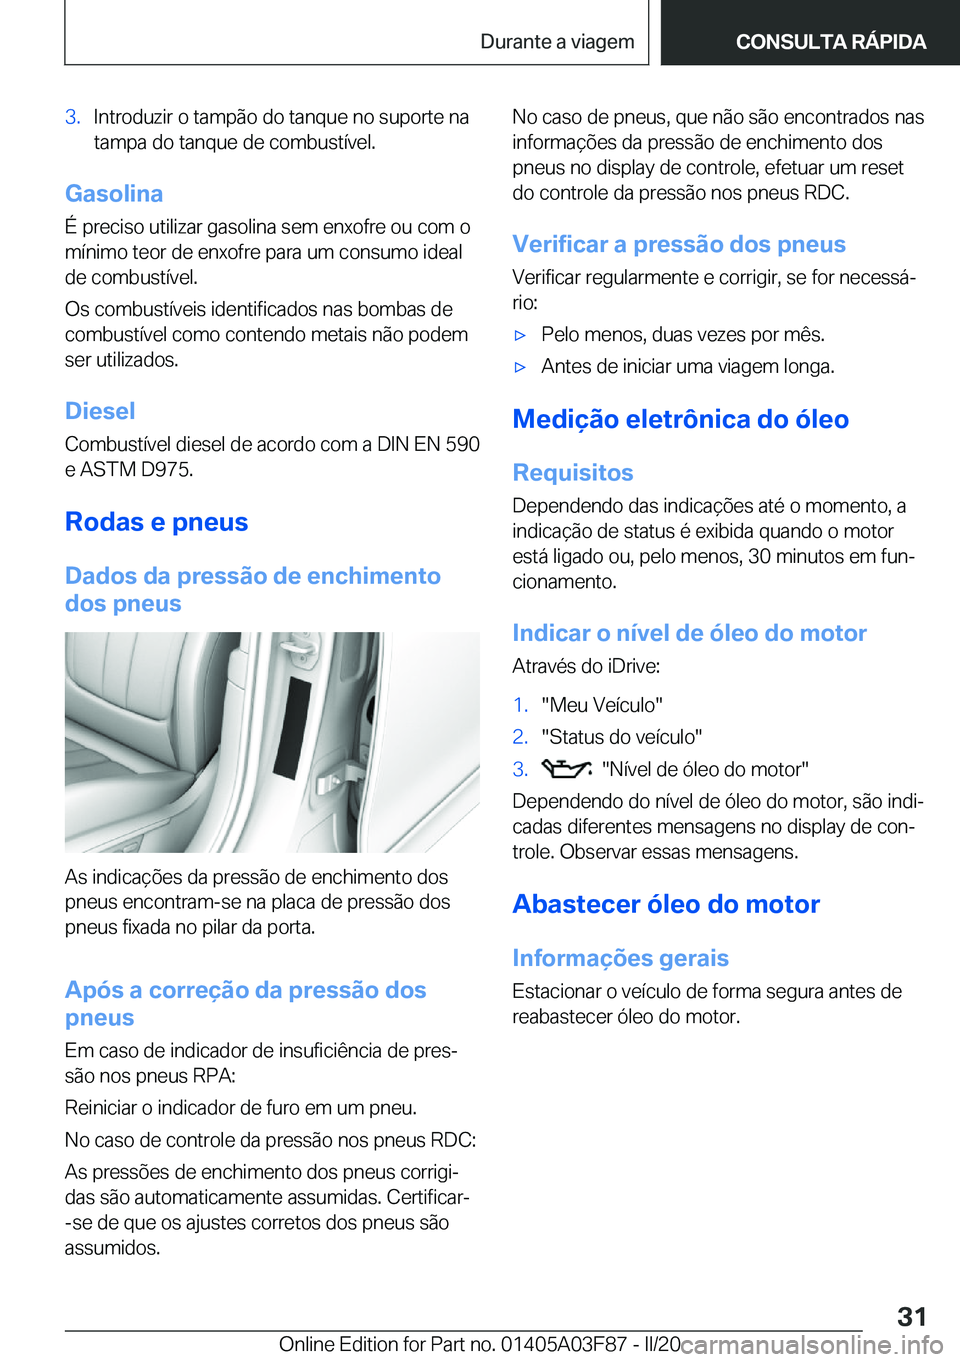 BMW 3 SERIES 2020  Manual do condutor (in Portuguese) �3�.�I�n�t�r�o�d�u�z�i�r��o��t�a�m�p�ã�o��d�o��t�a�n�q�u�e��n�o��s�u�p�o�r�t�e��n�a�t�a�m�p�a��d�o��t�a�n�q�u�e��d�e��c�o�m�b�u�s�t�